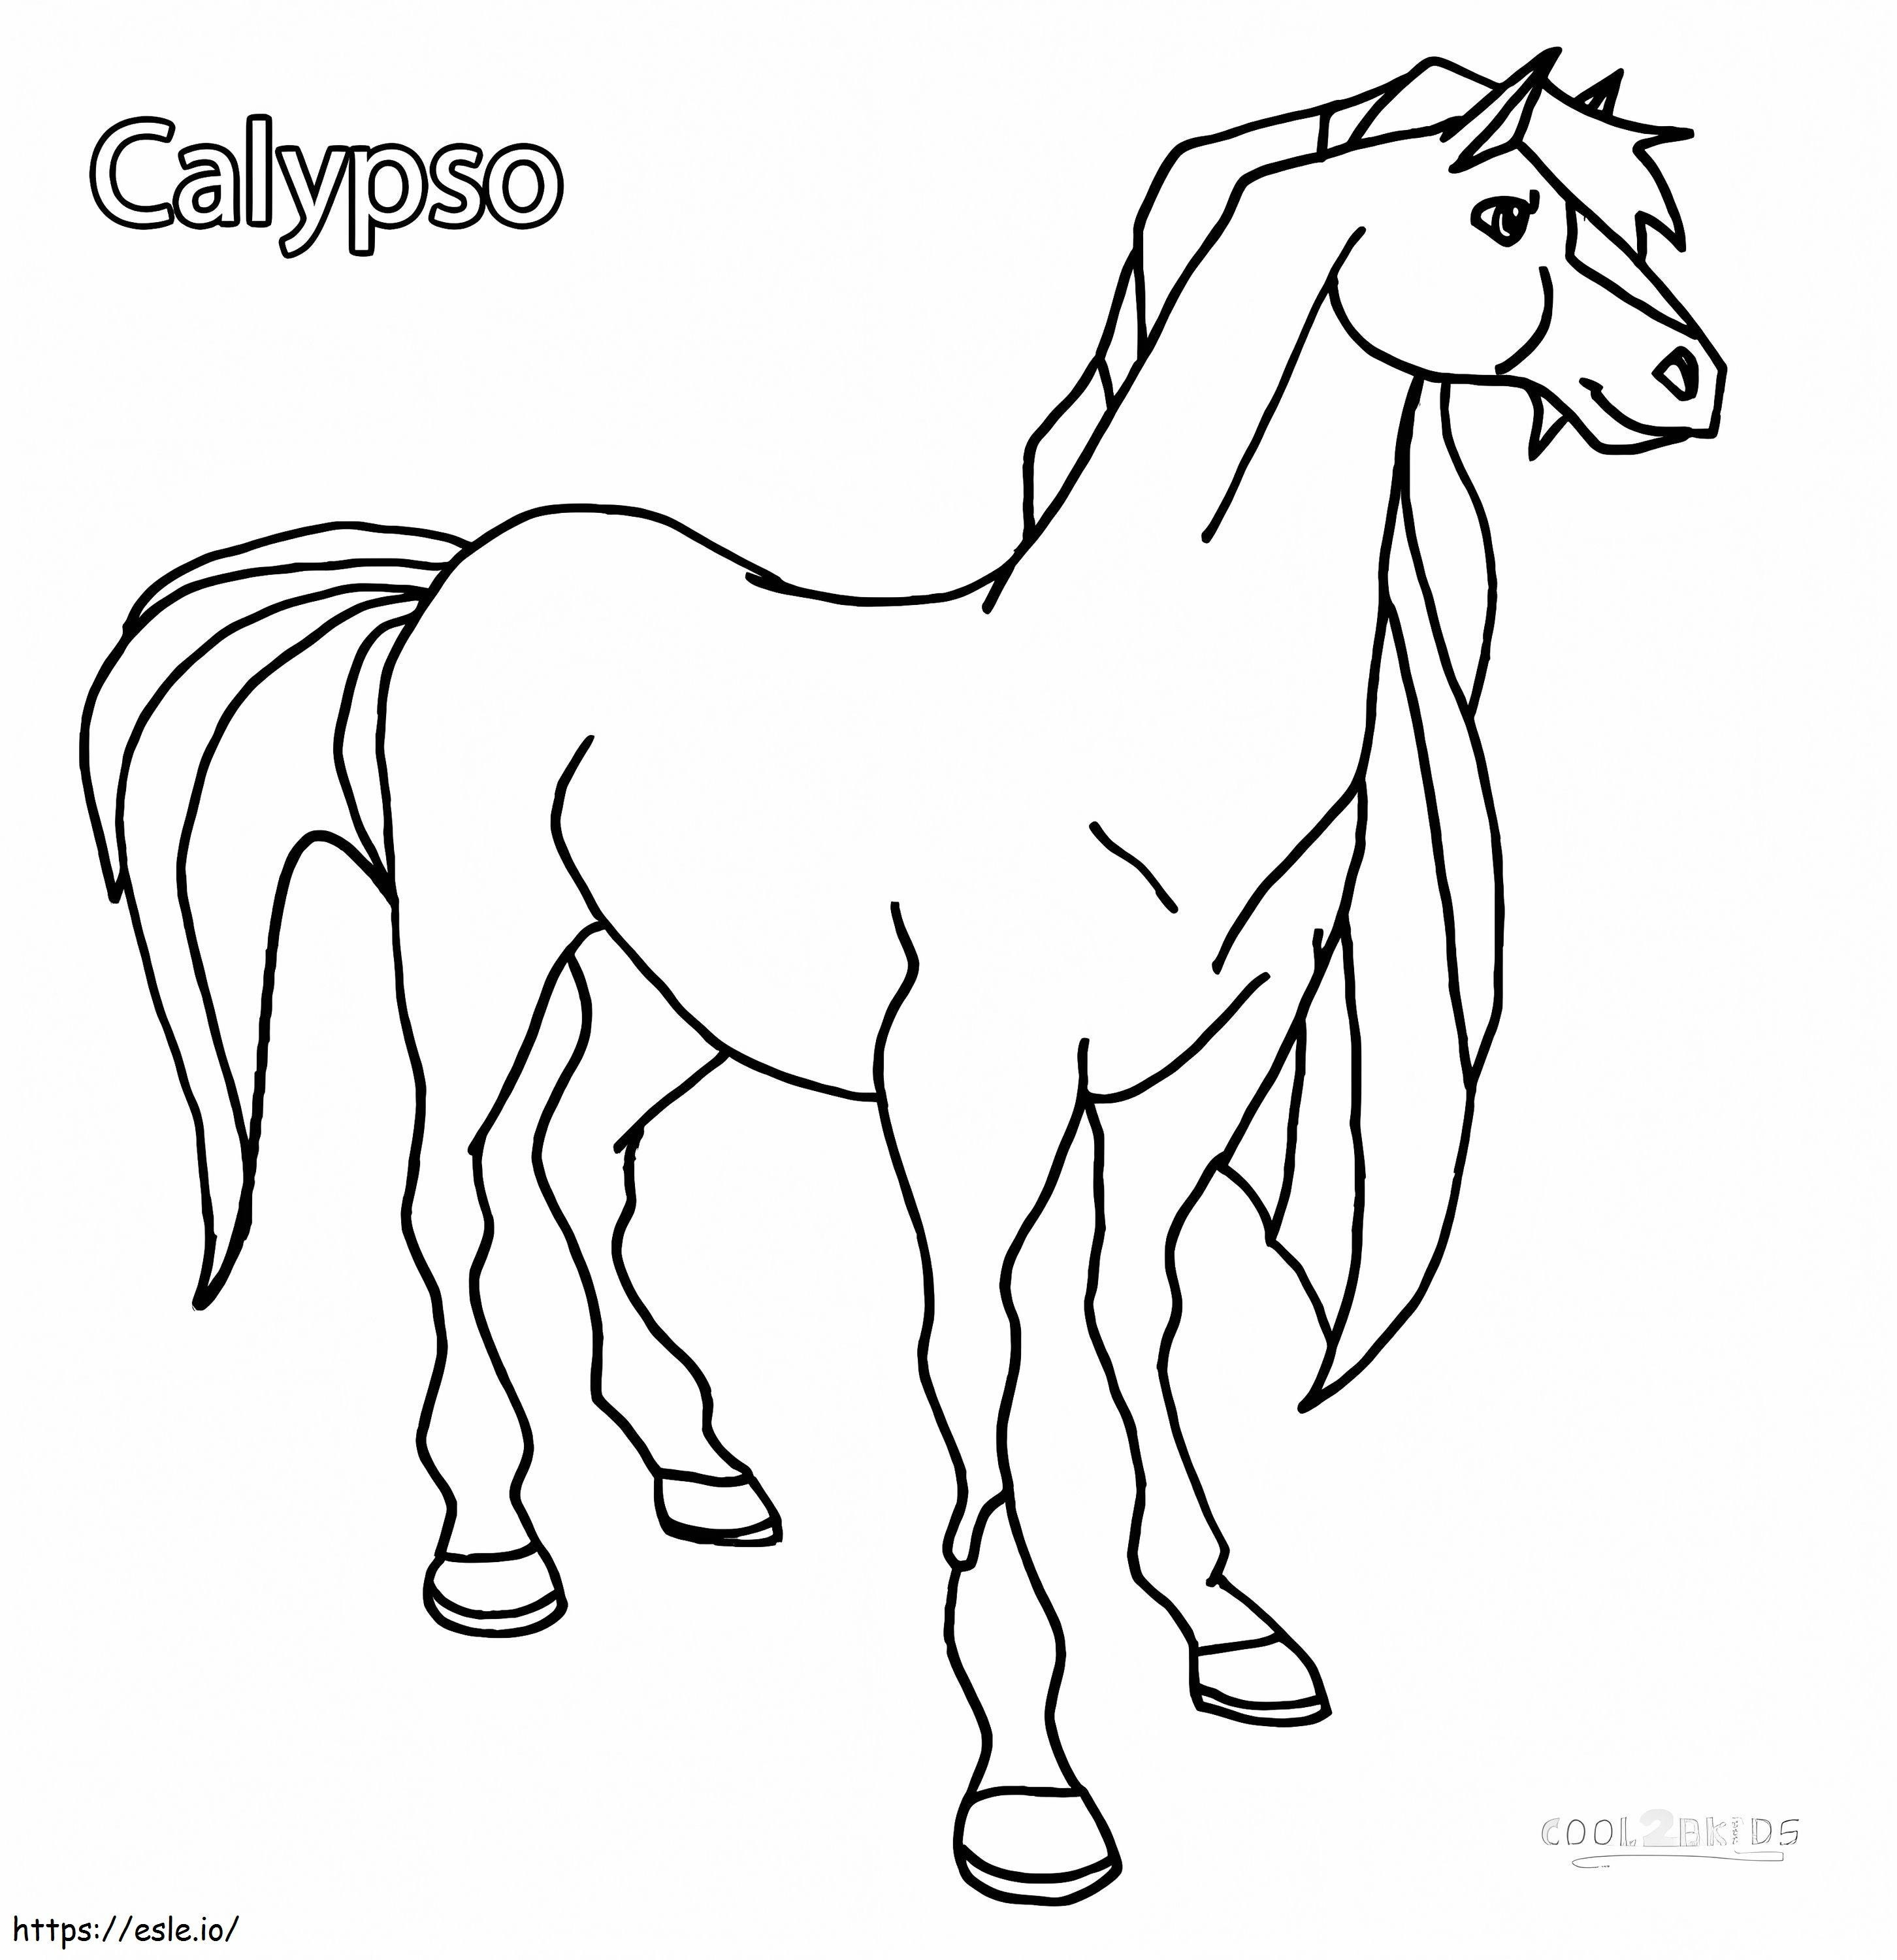 Calypso z Horseland kolorowanka